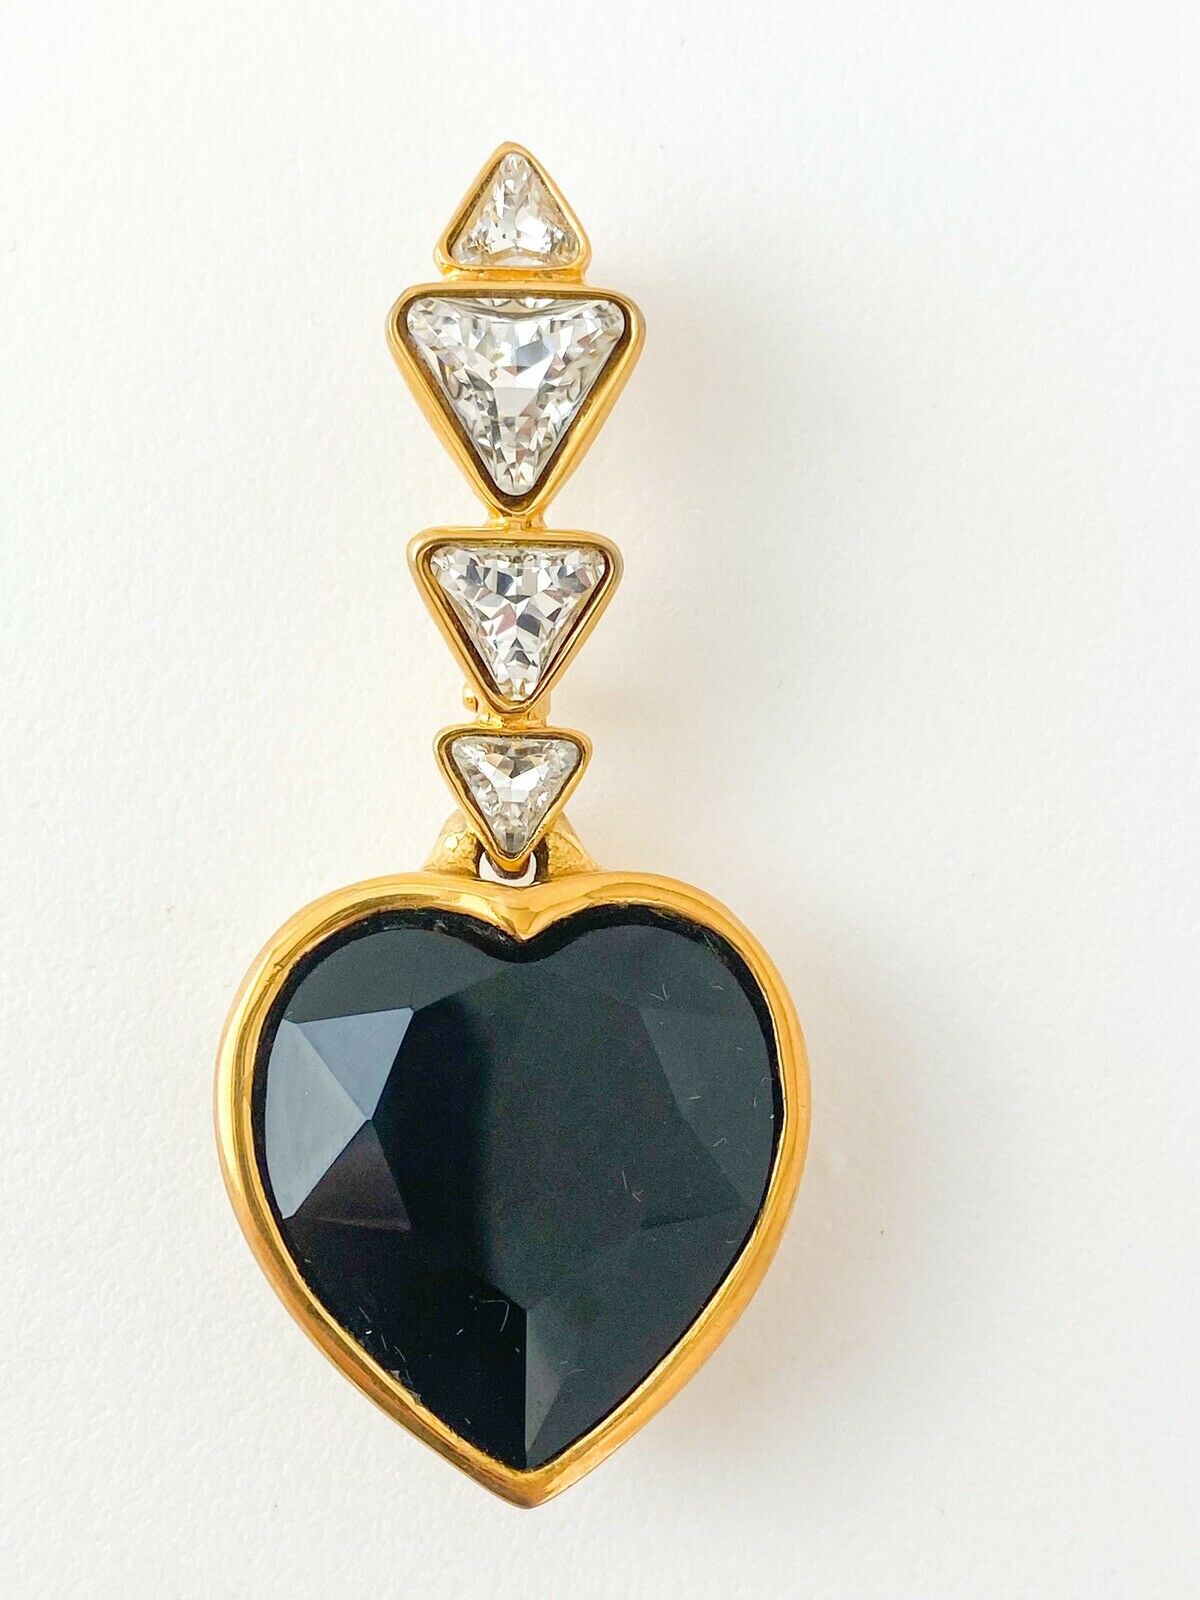 YSL Yves Saint Laurent Vintage Gold Tone Heart Brooch Pin Black Rhinestones